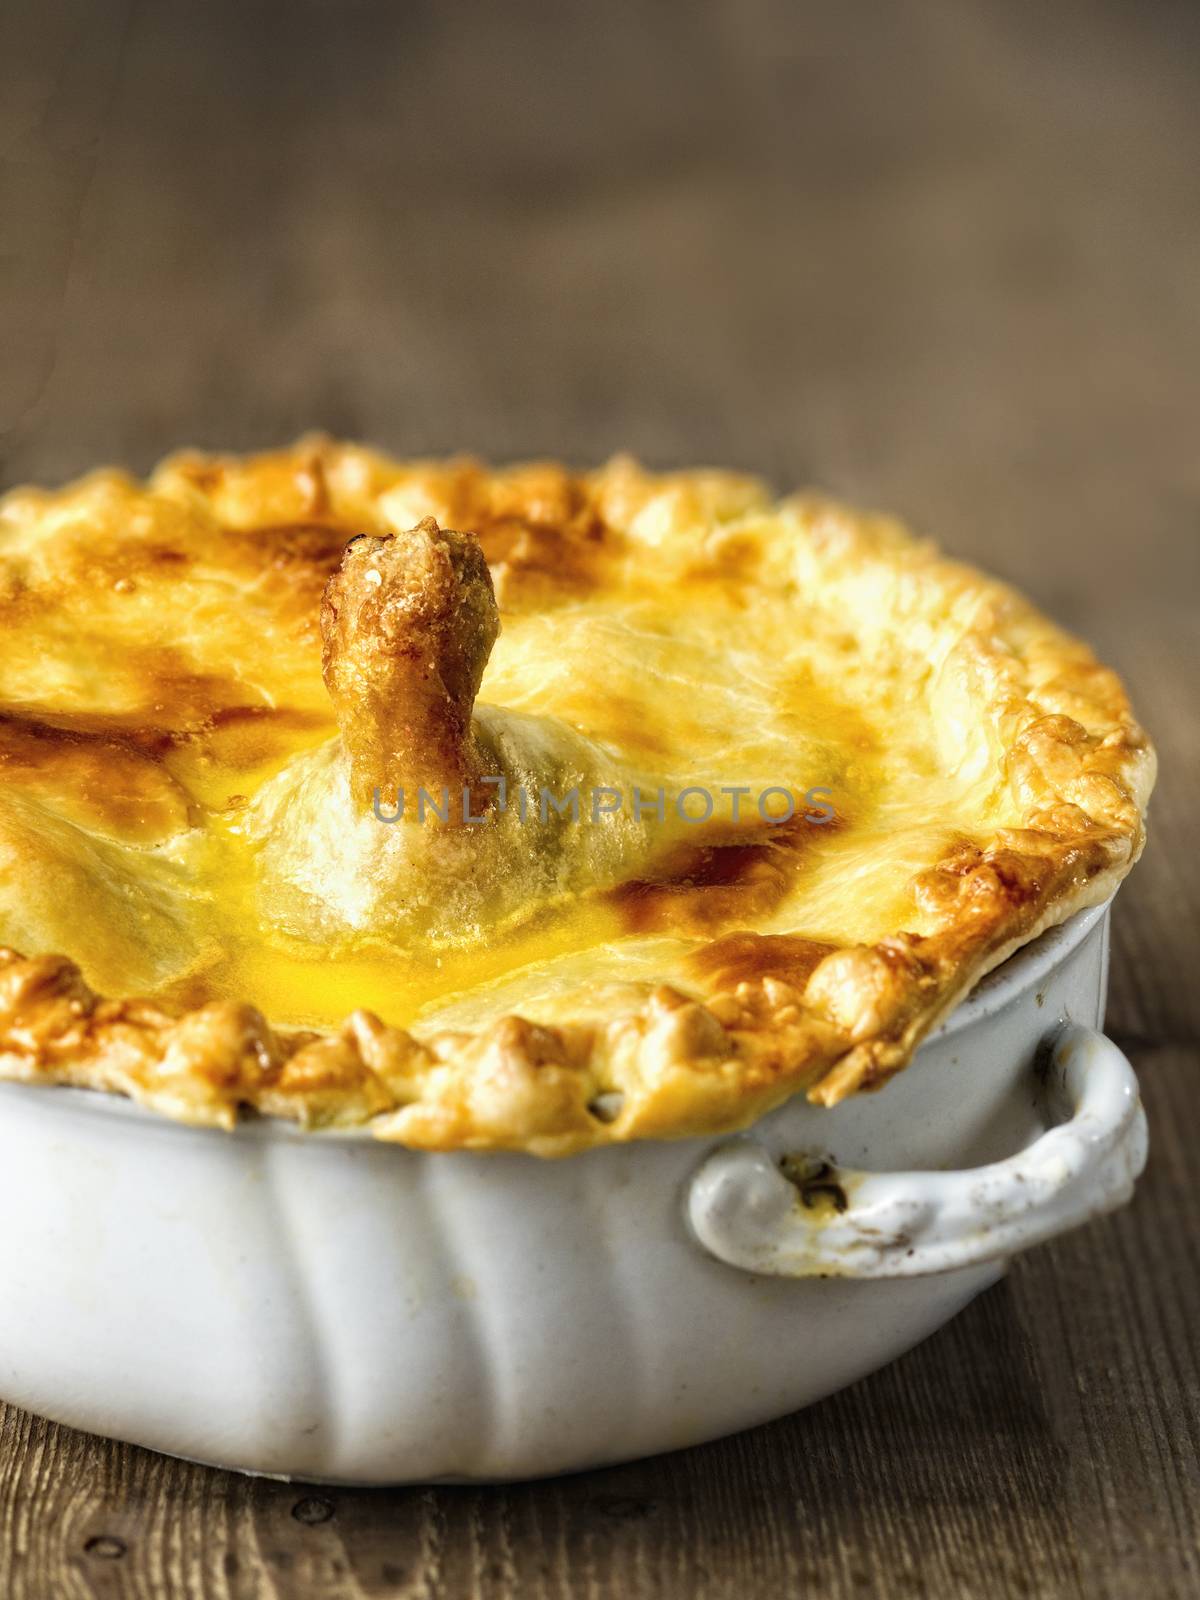 golden rustic english chicken pie by zkruger